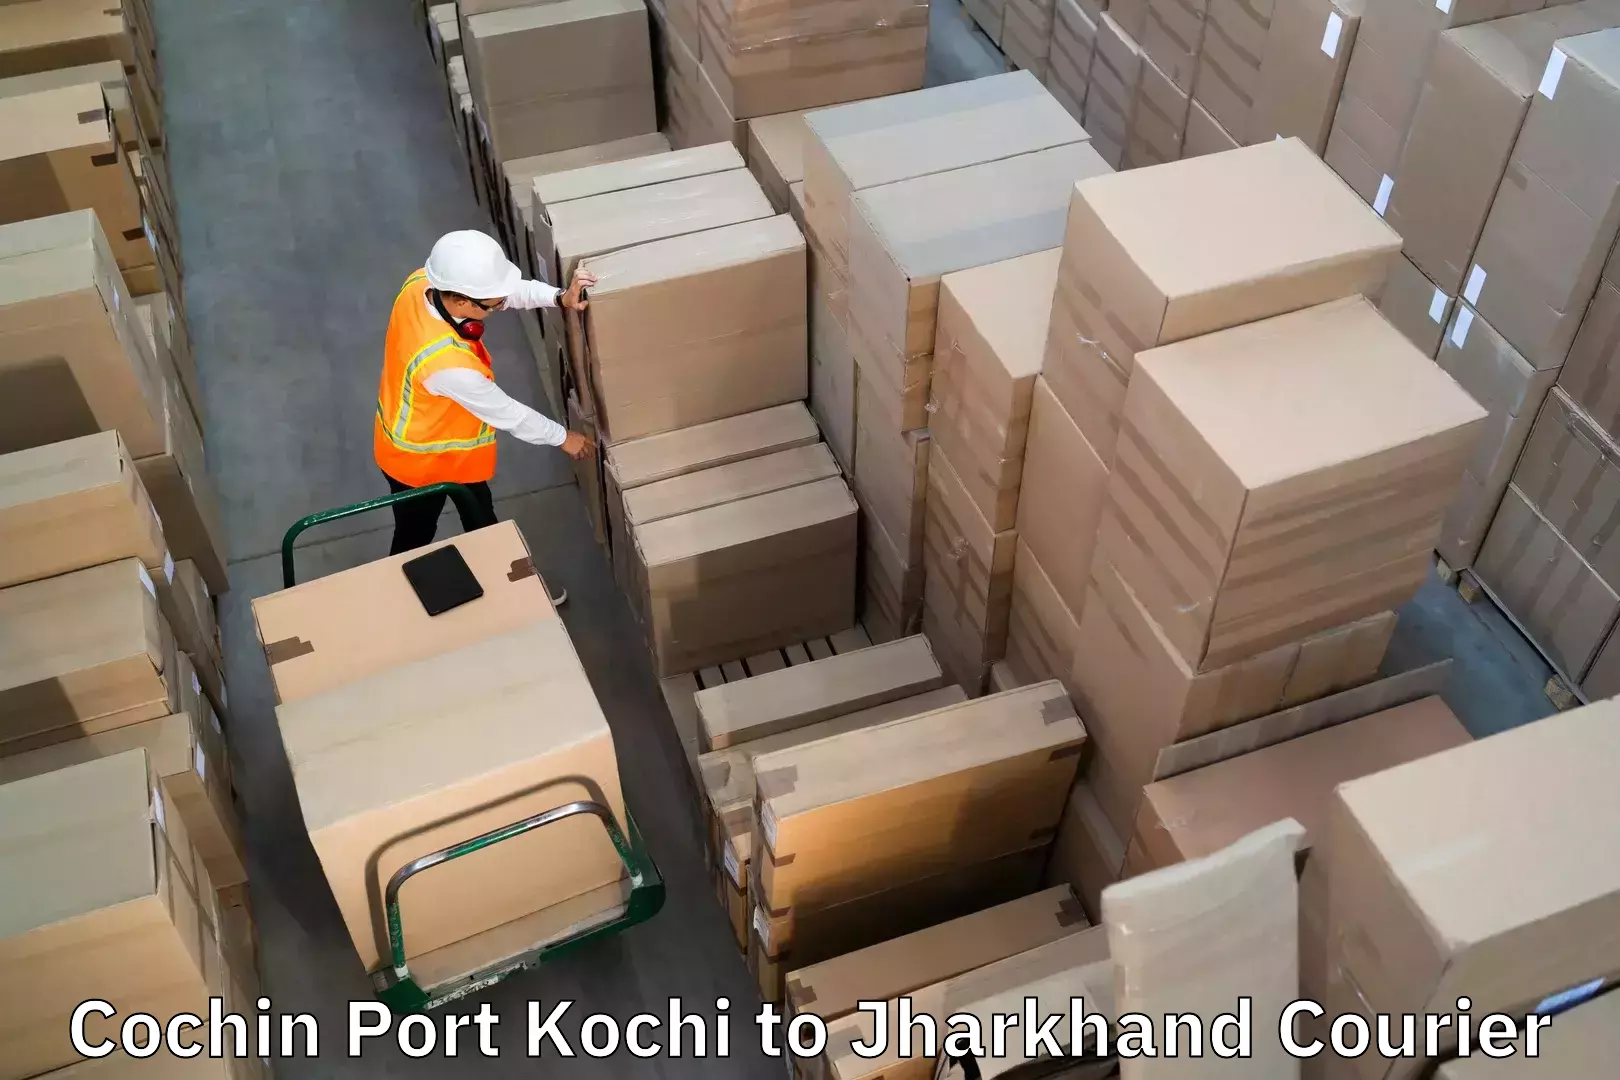 Baggage transport professionals Cochin Port Kochi to Torpa